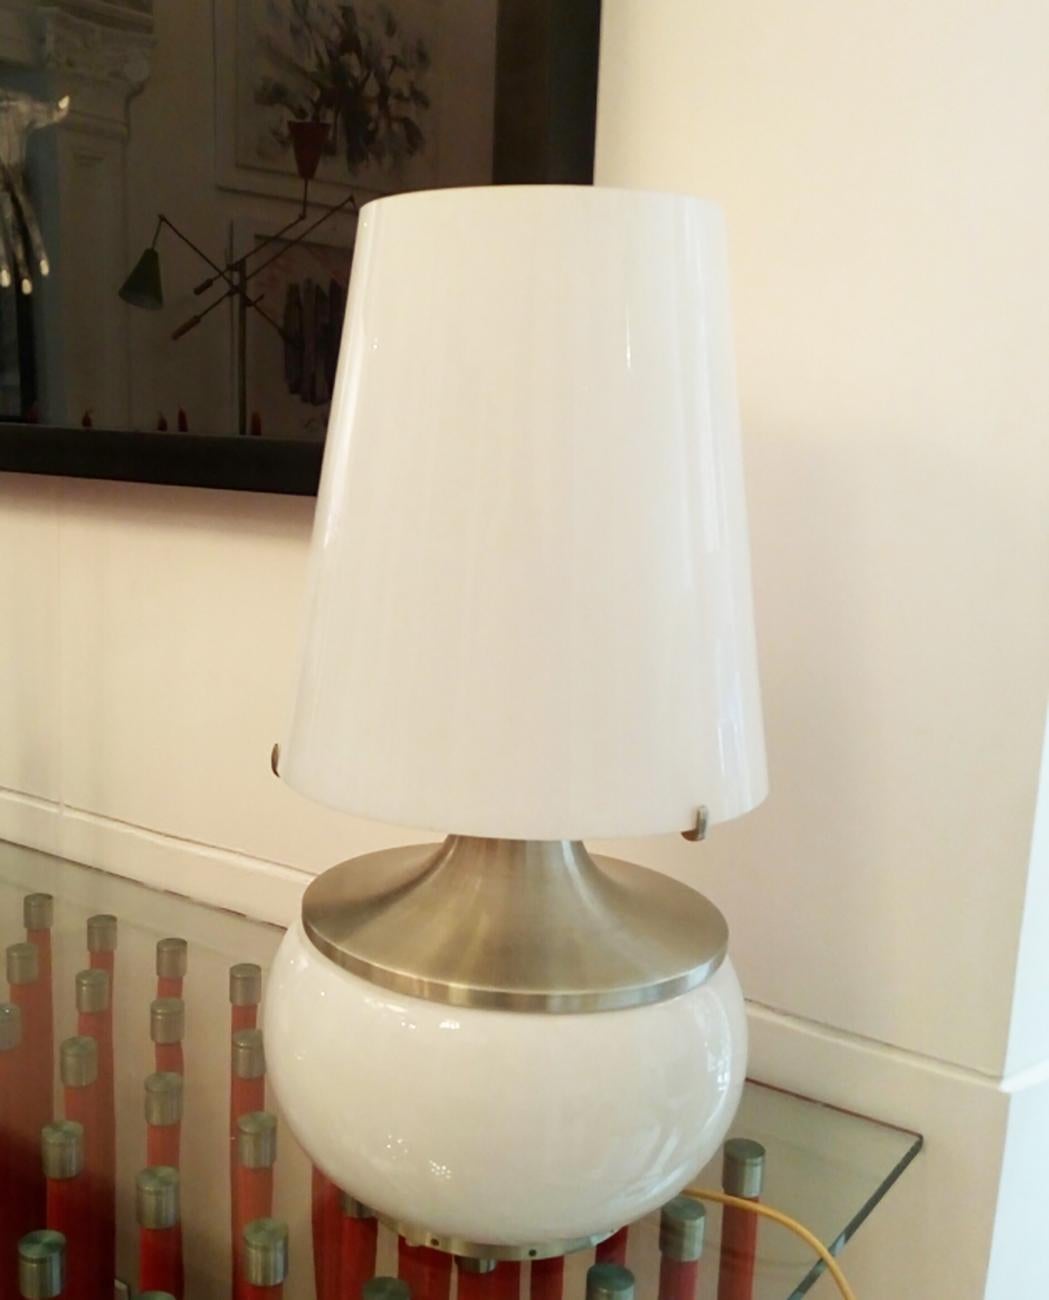 Rare table lamp by Pia Guidetti Crippa for Lumi.
Base in chrome and white glass, diffuser in white glass.